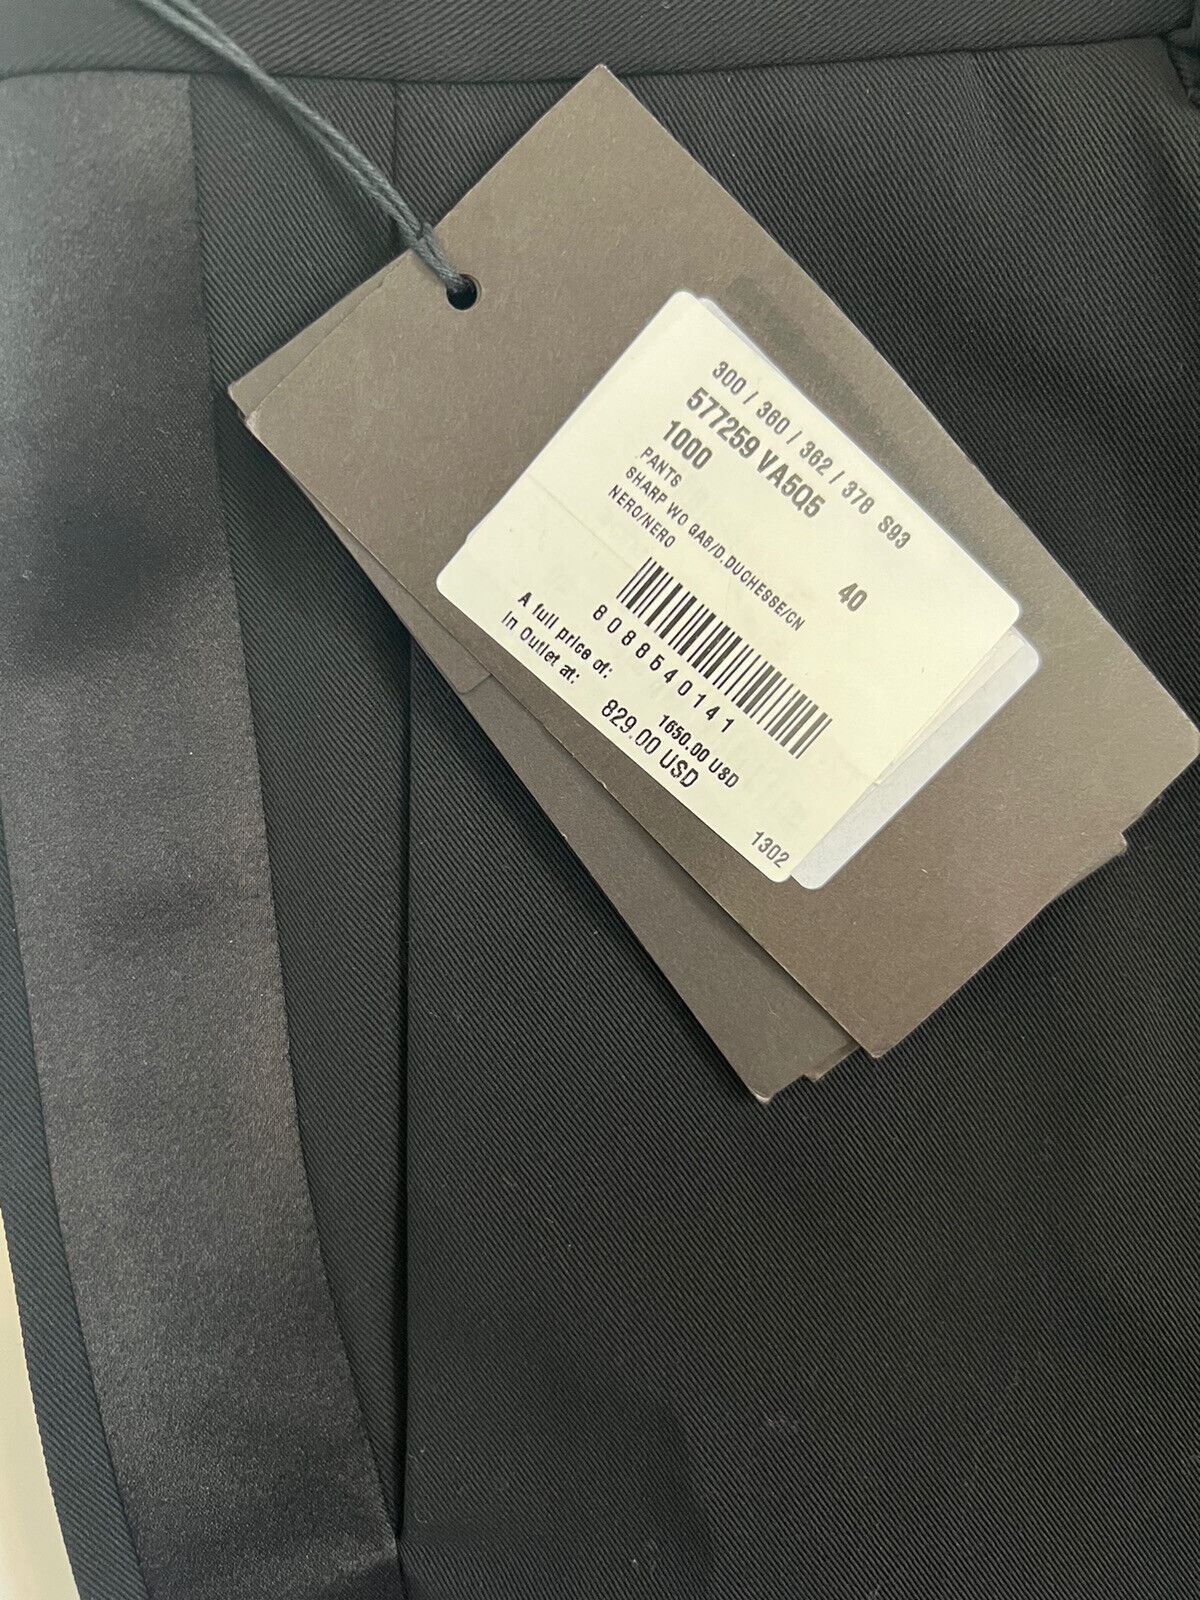 NWT $1650 Bottega Veneta Women's Wool Tuxedo Pants Black Size 4 US (40 Euro)